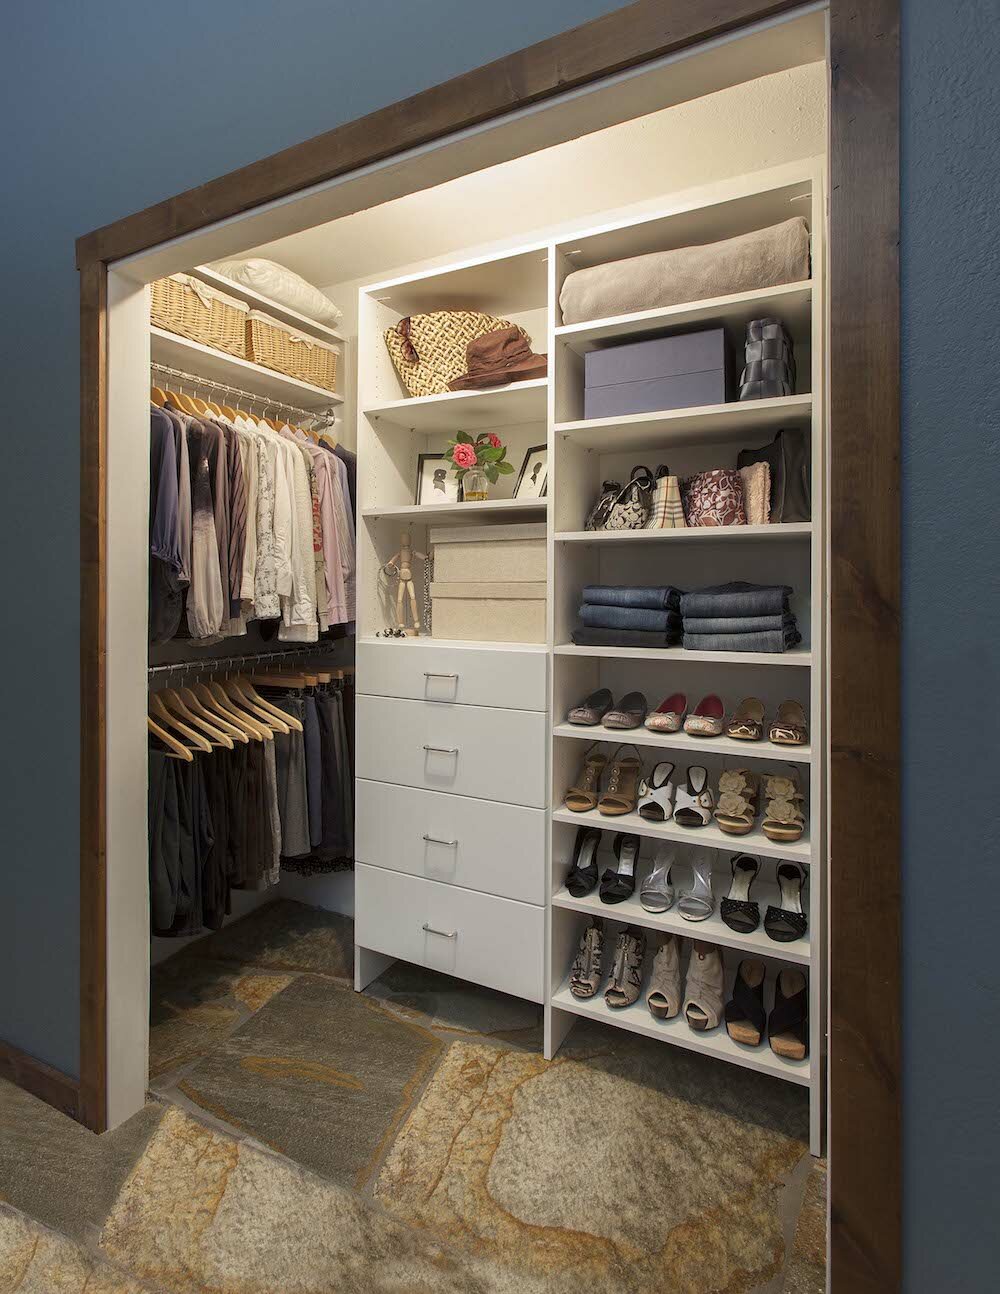 Inspiring Interior Storage Design Ideas with Diy Walk in Closet: Prefab Closet Systems | Diy Walk In Closet | Walk In Closet Shelving Ideas